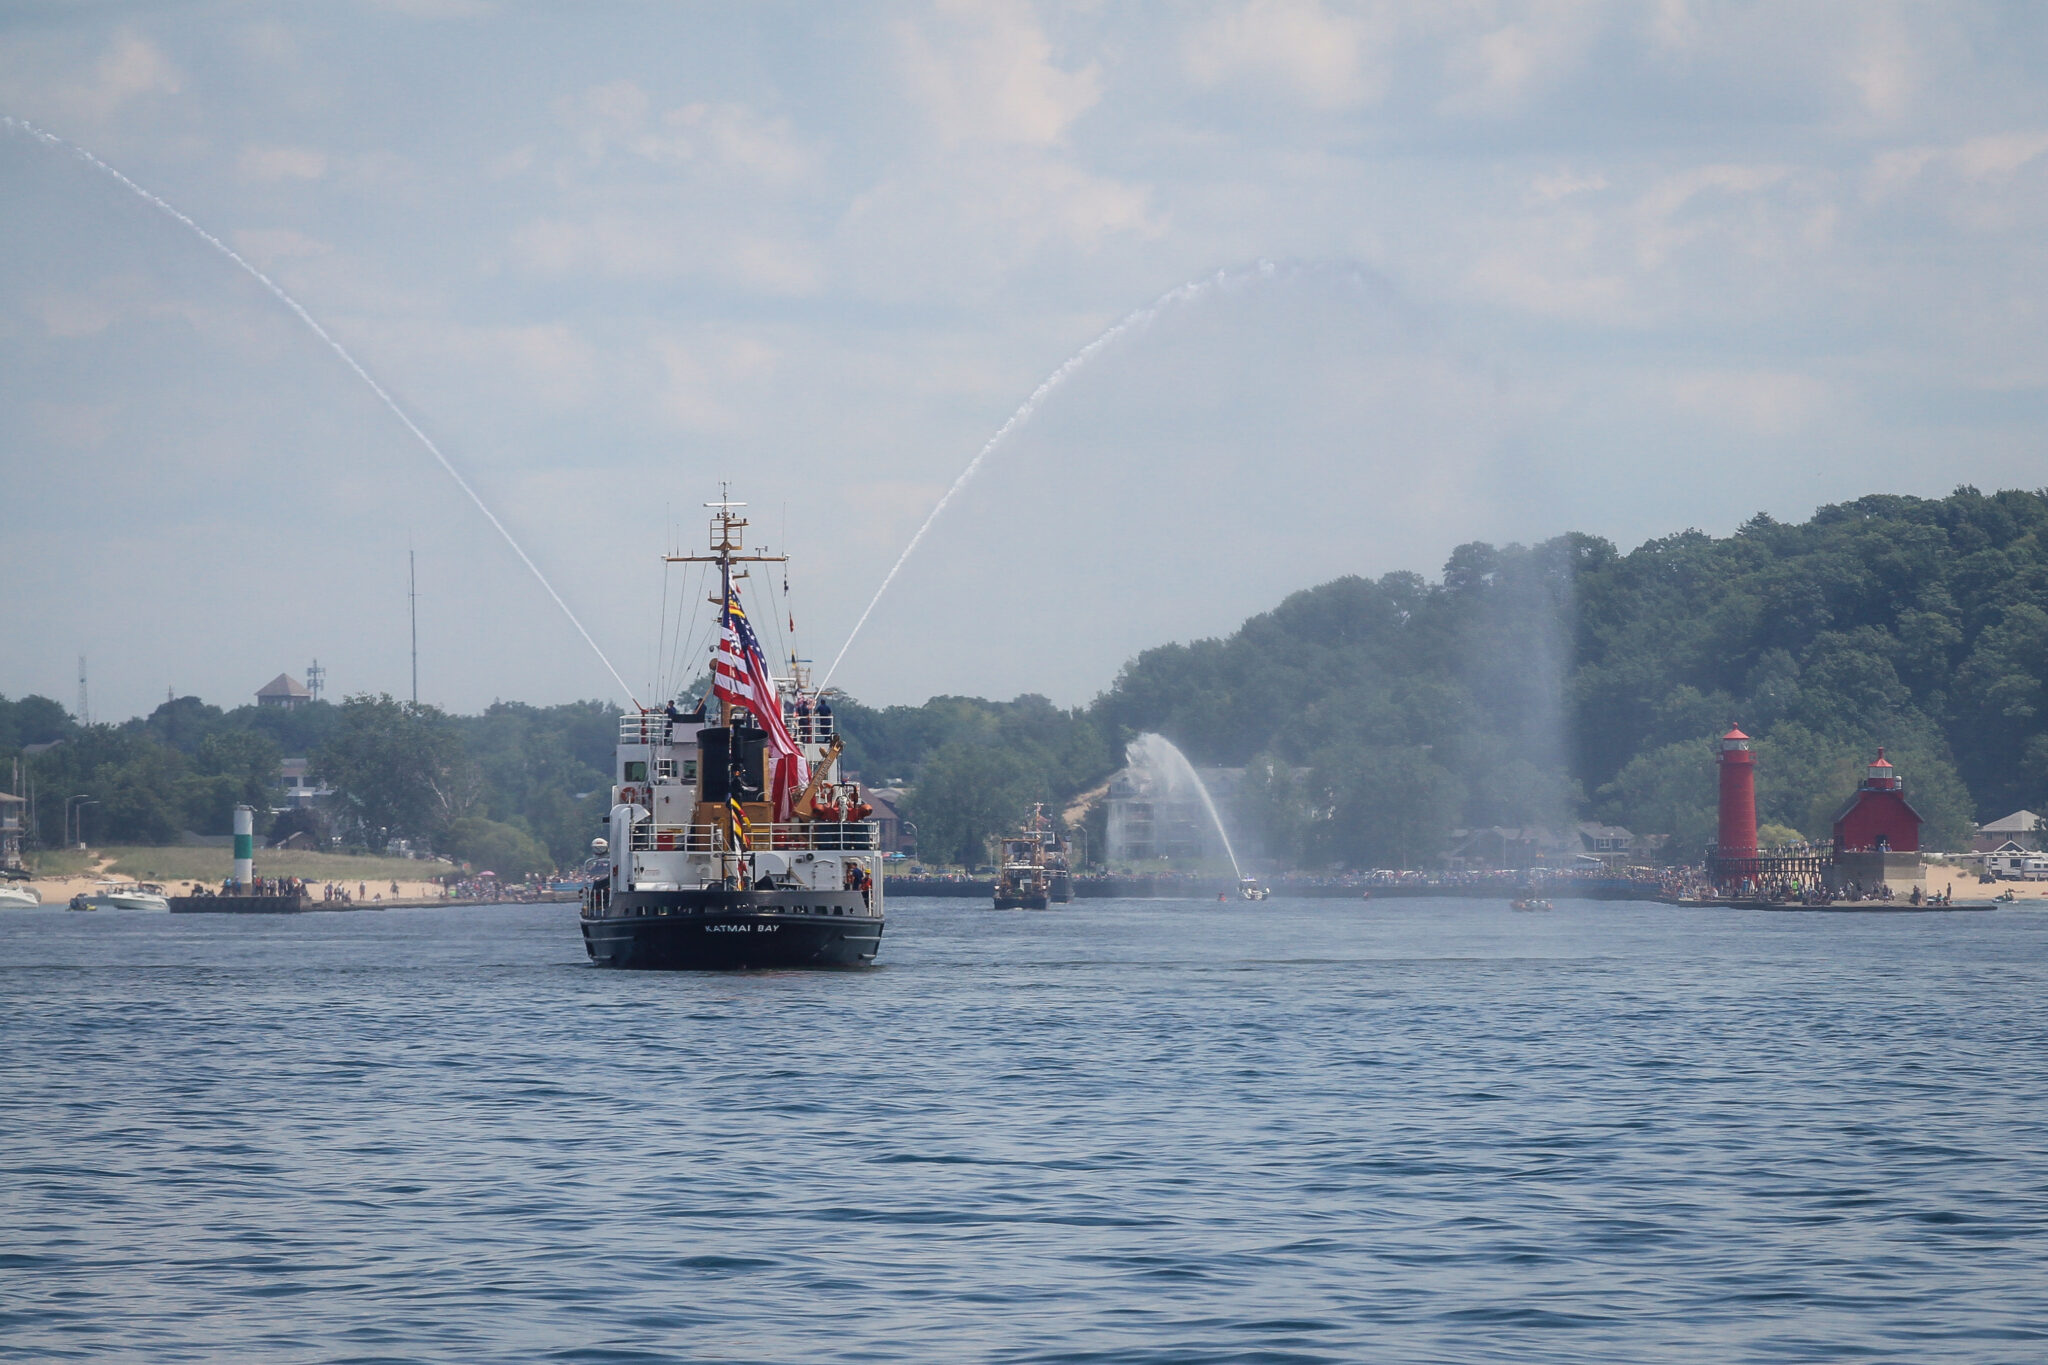 Grand Haven Coast Guard Festival Parade of Ships